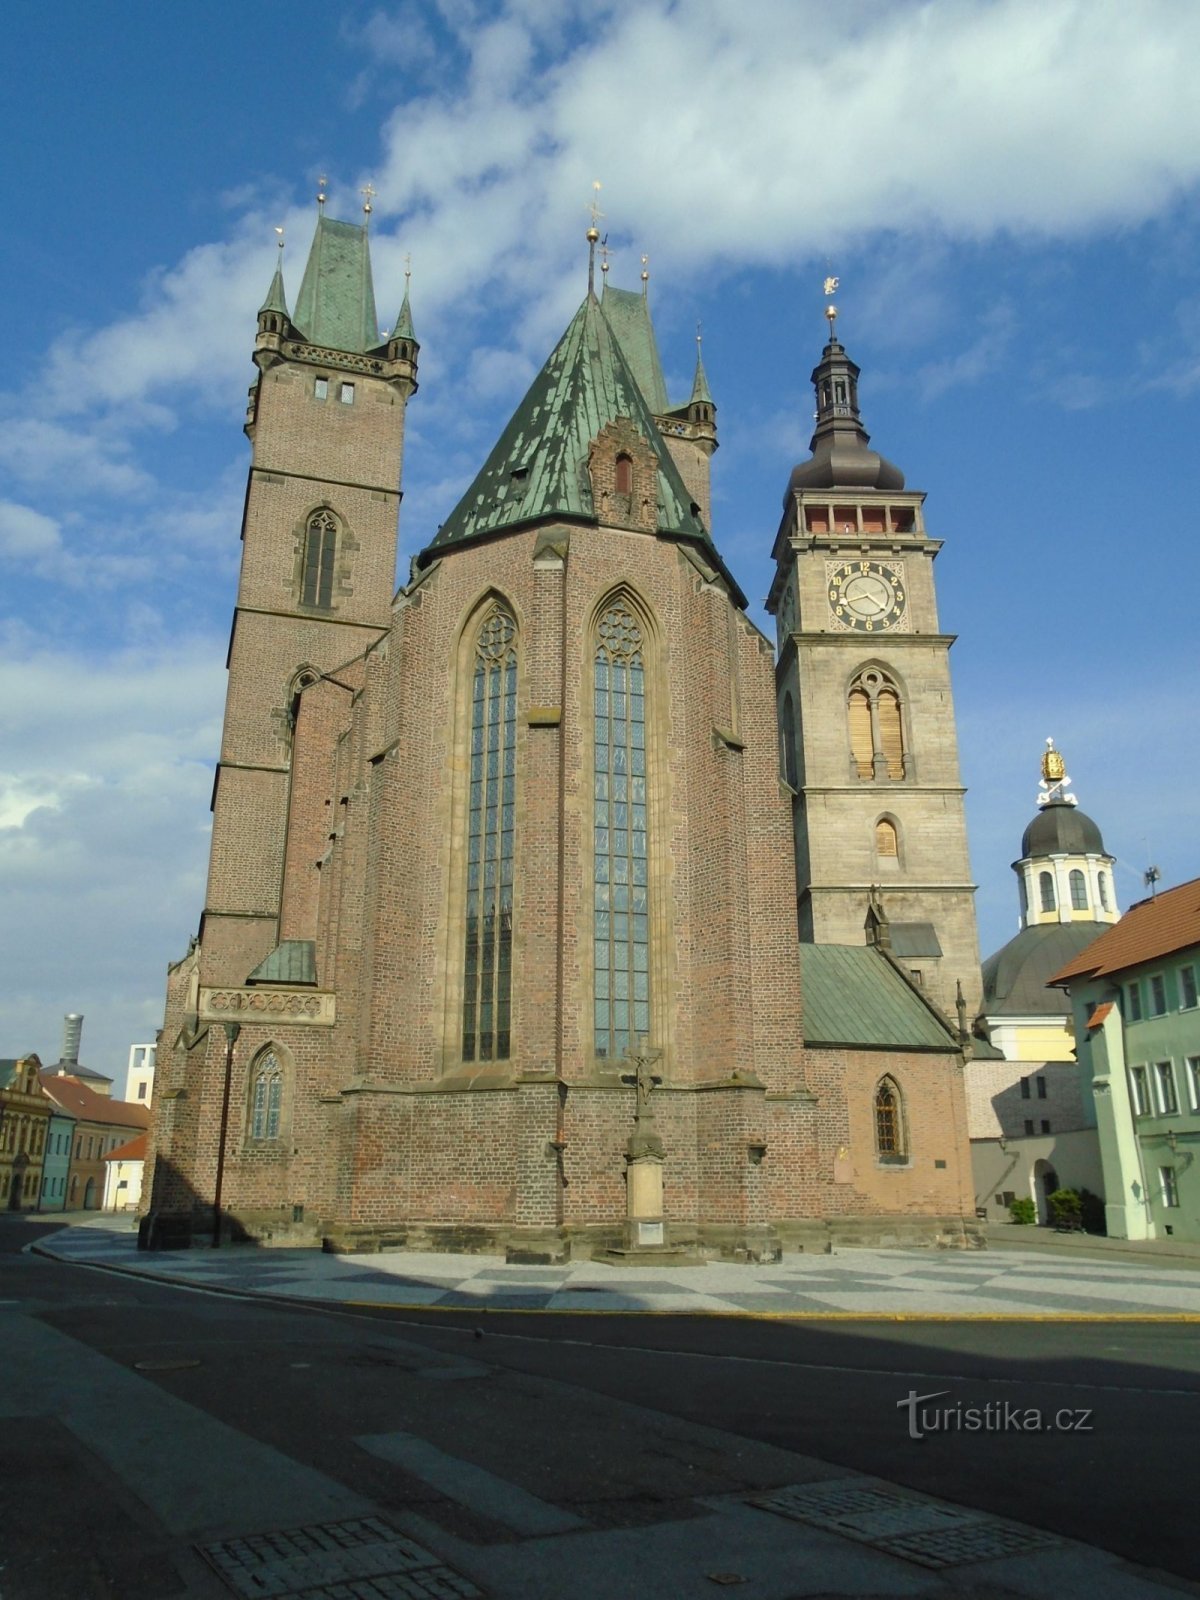 Catedrala Sf. Ducha cu Turnul Alb (Hradec Králové, 1.5.2019 mai XNUMX)